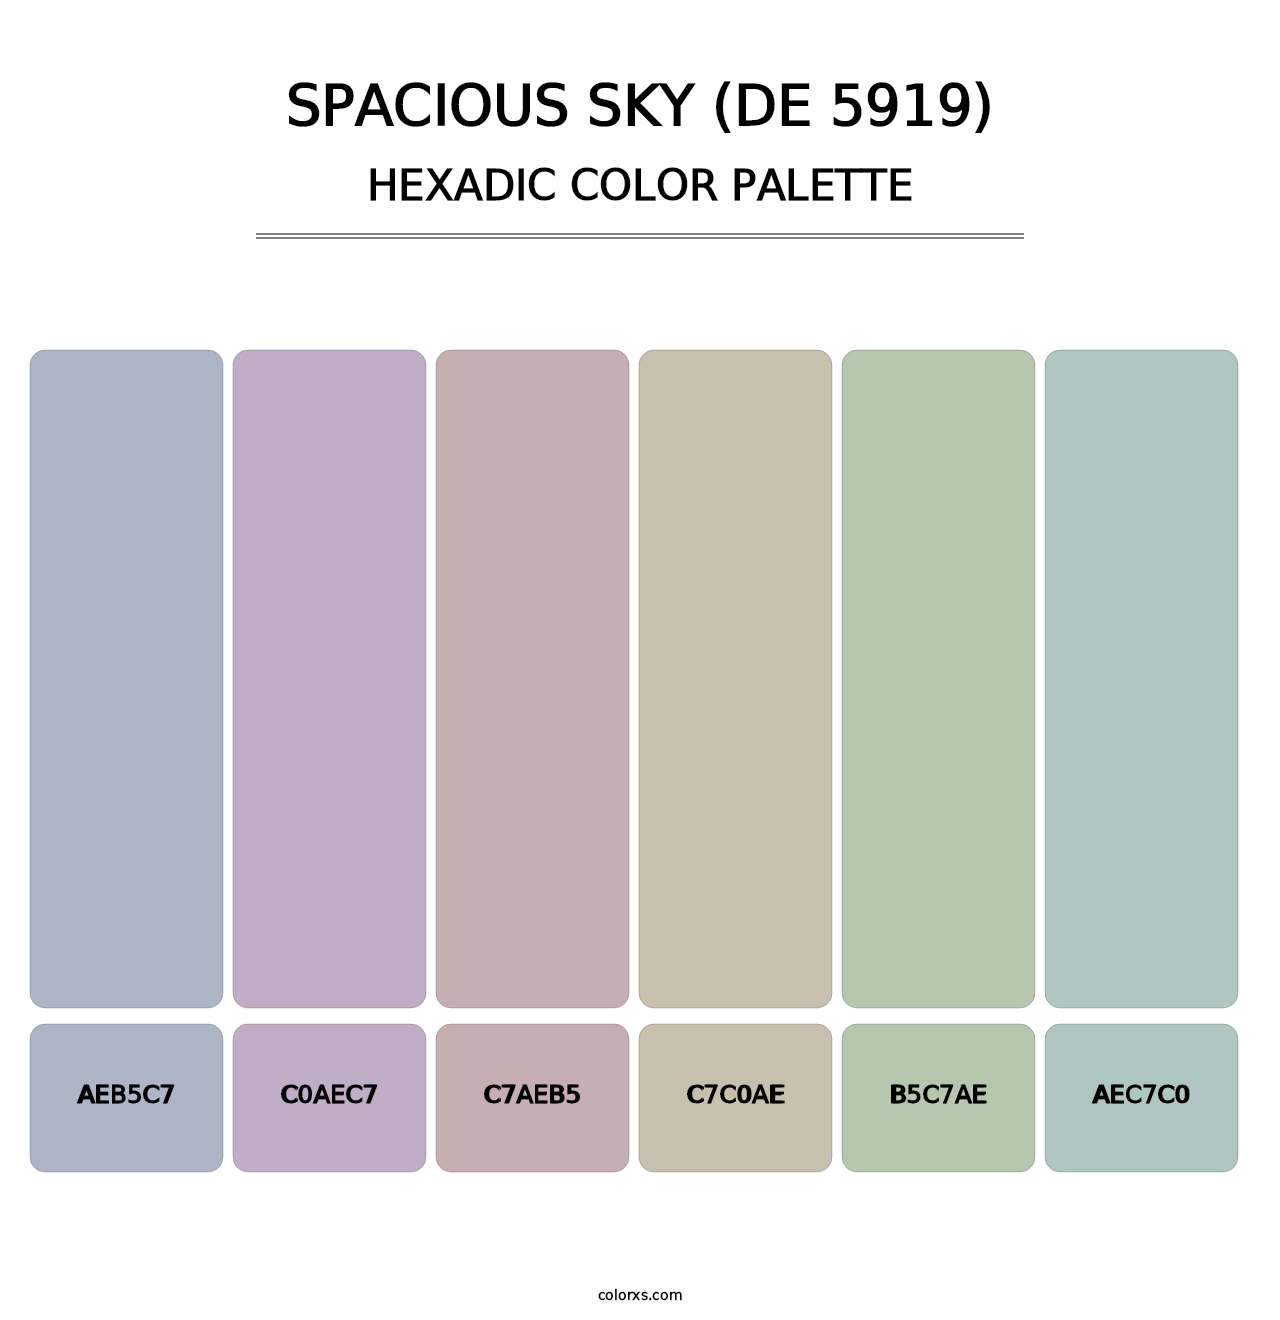 Spacious Sky (DE 5919) - Hexadic Color Palette